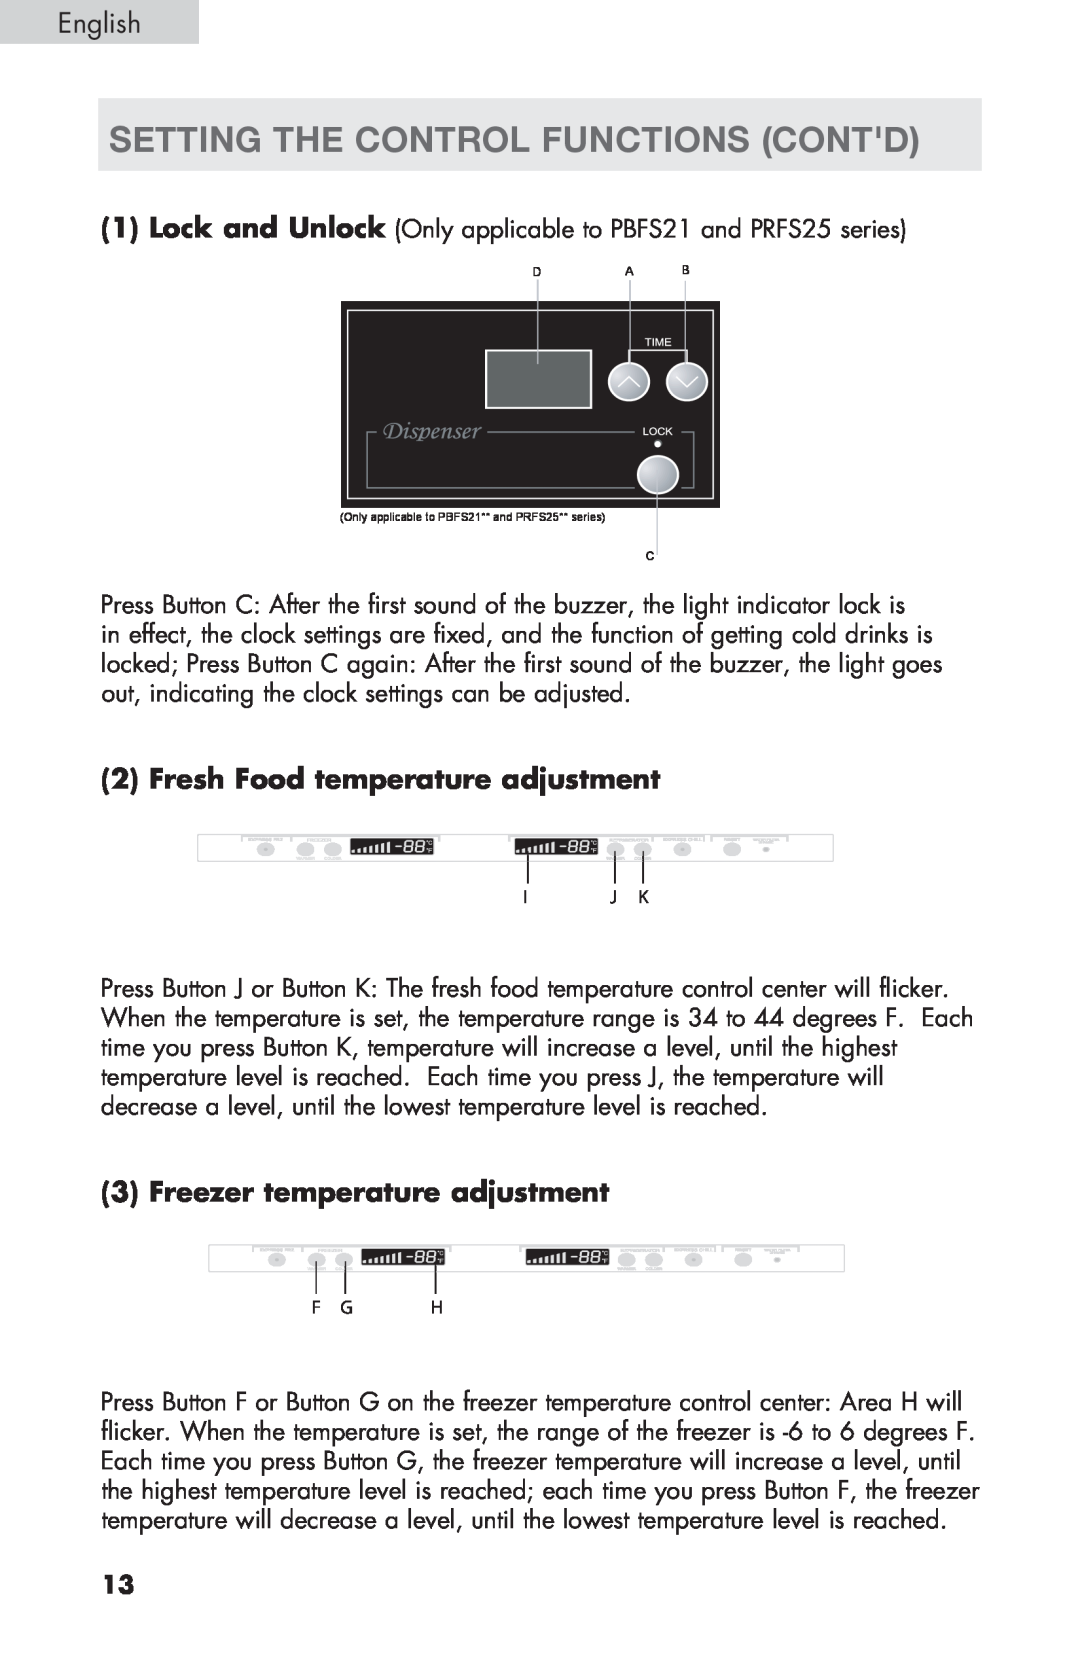 Haier PRFS25 Setting the Control Functions contd, Fresh Food temperature adjustment, Freezer temperature adjustment 